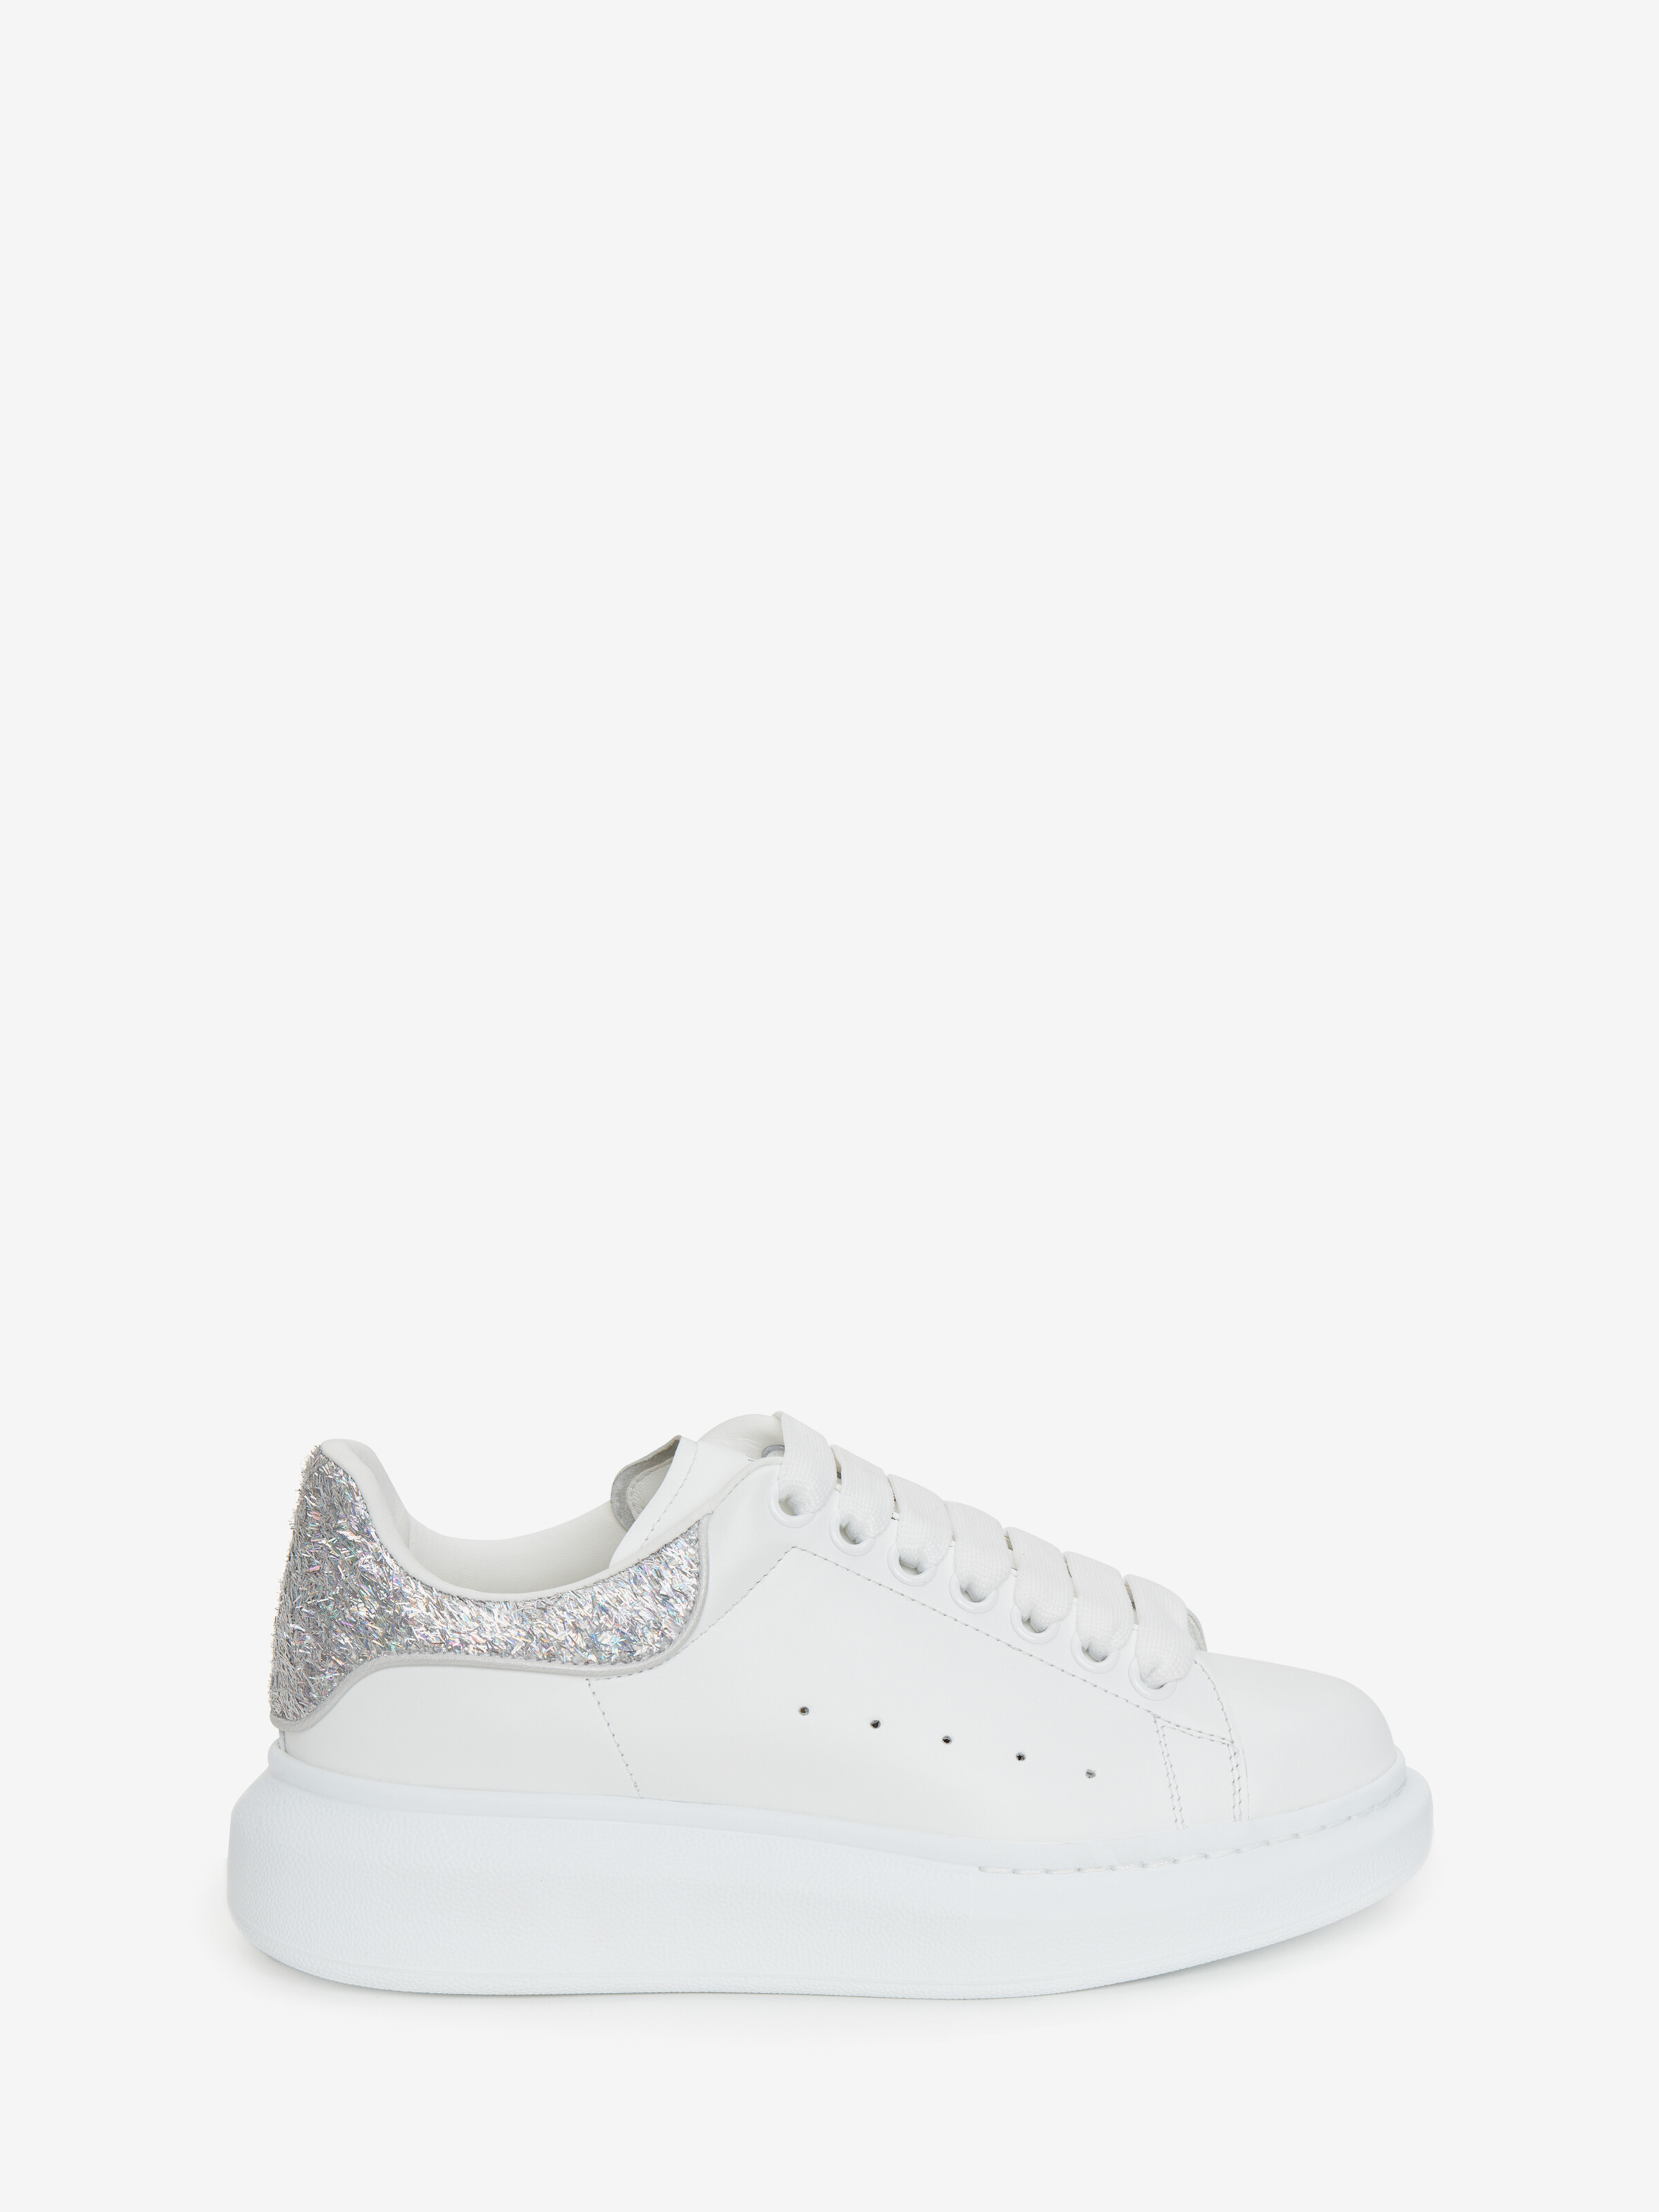 Oversized Sneaker in White/Silver | Alexander McQueen US